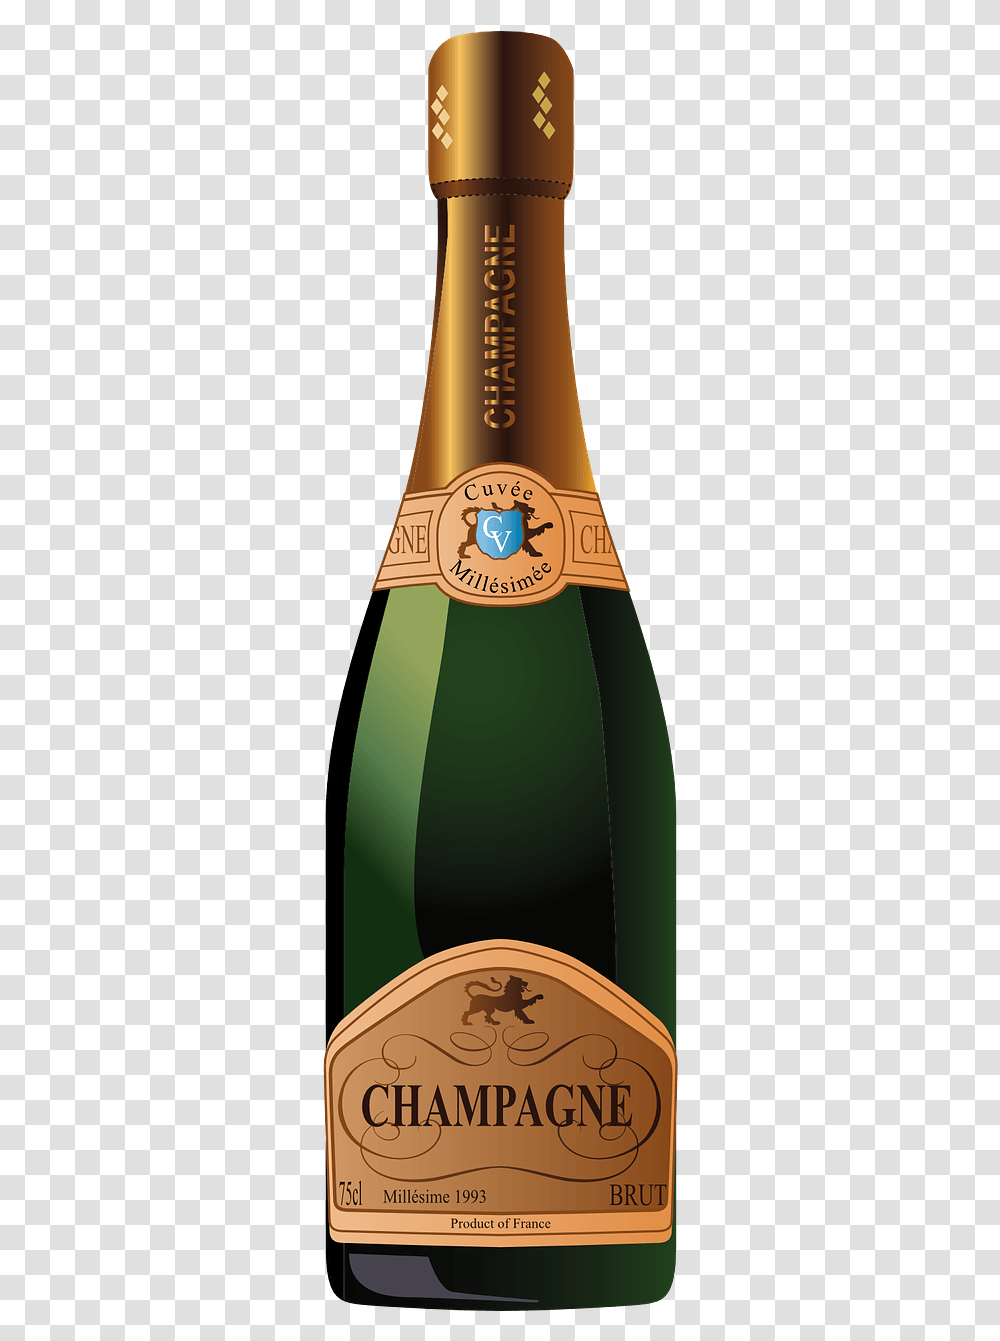 Champagne Bottle Clipart Champagne Mockup Psd Free, Alcohol, Beverage, Drink, Wine Transparent Png